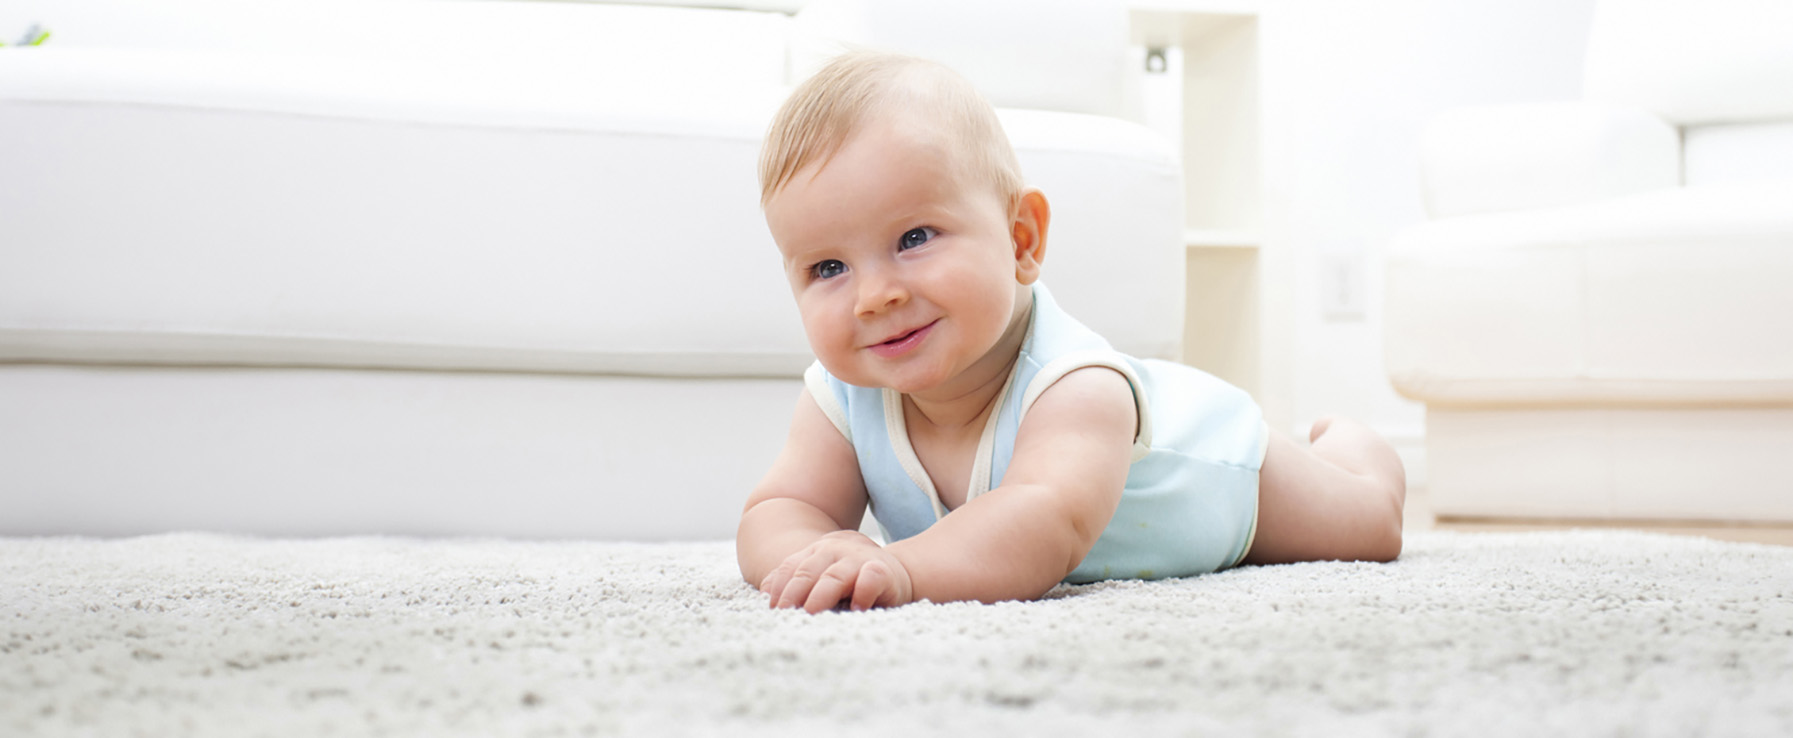 Babycare Ειδικη επεξεργασια παιδικών χαλιων<br/>με υποαλλεργικα απορρυπαντικα